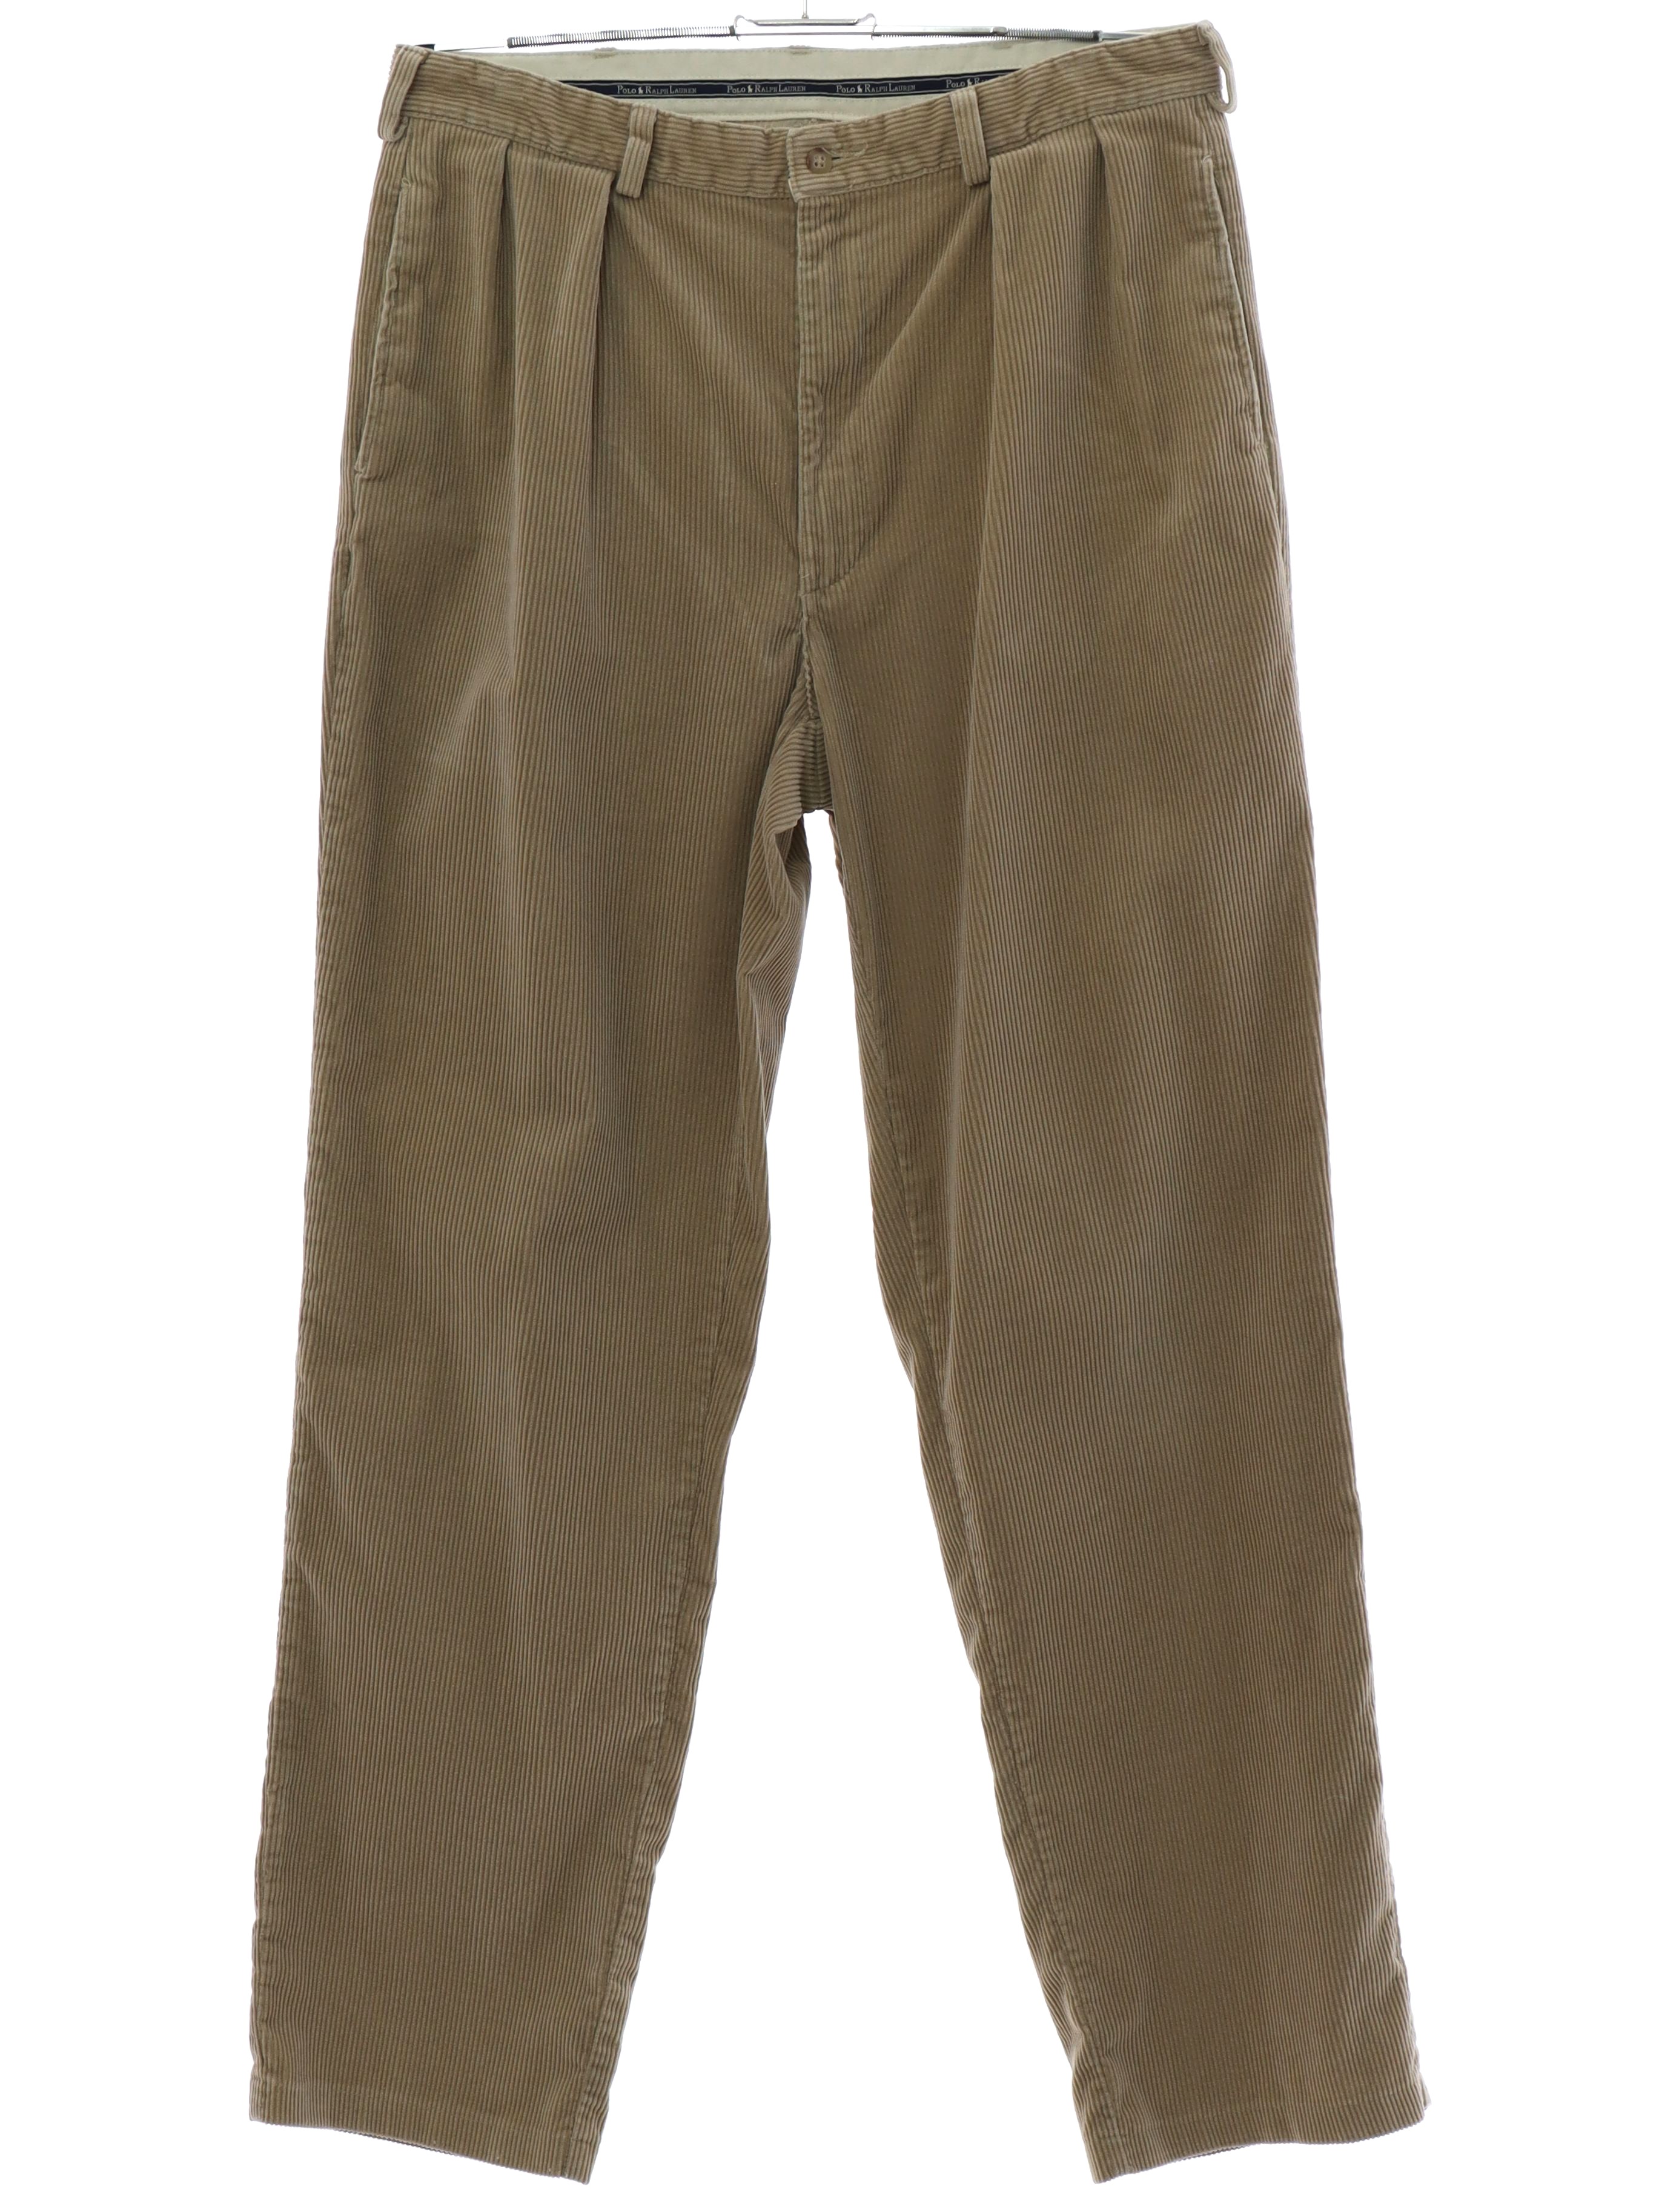 80's Vintage Pants: 80s -Polo Ralph Lauren- Mens tan solid colored ...